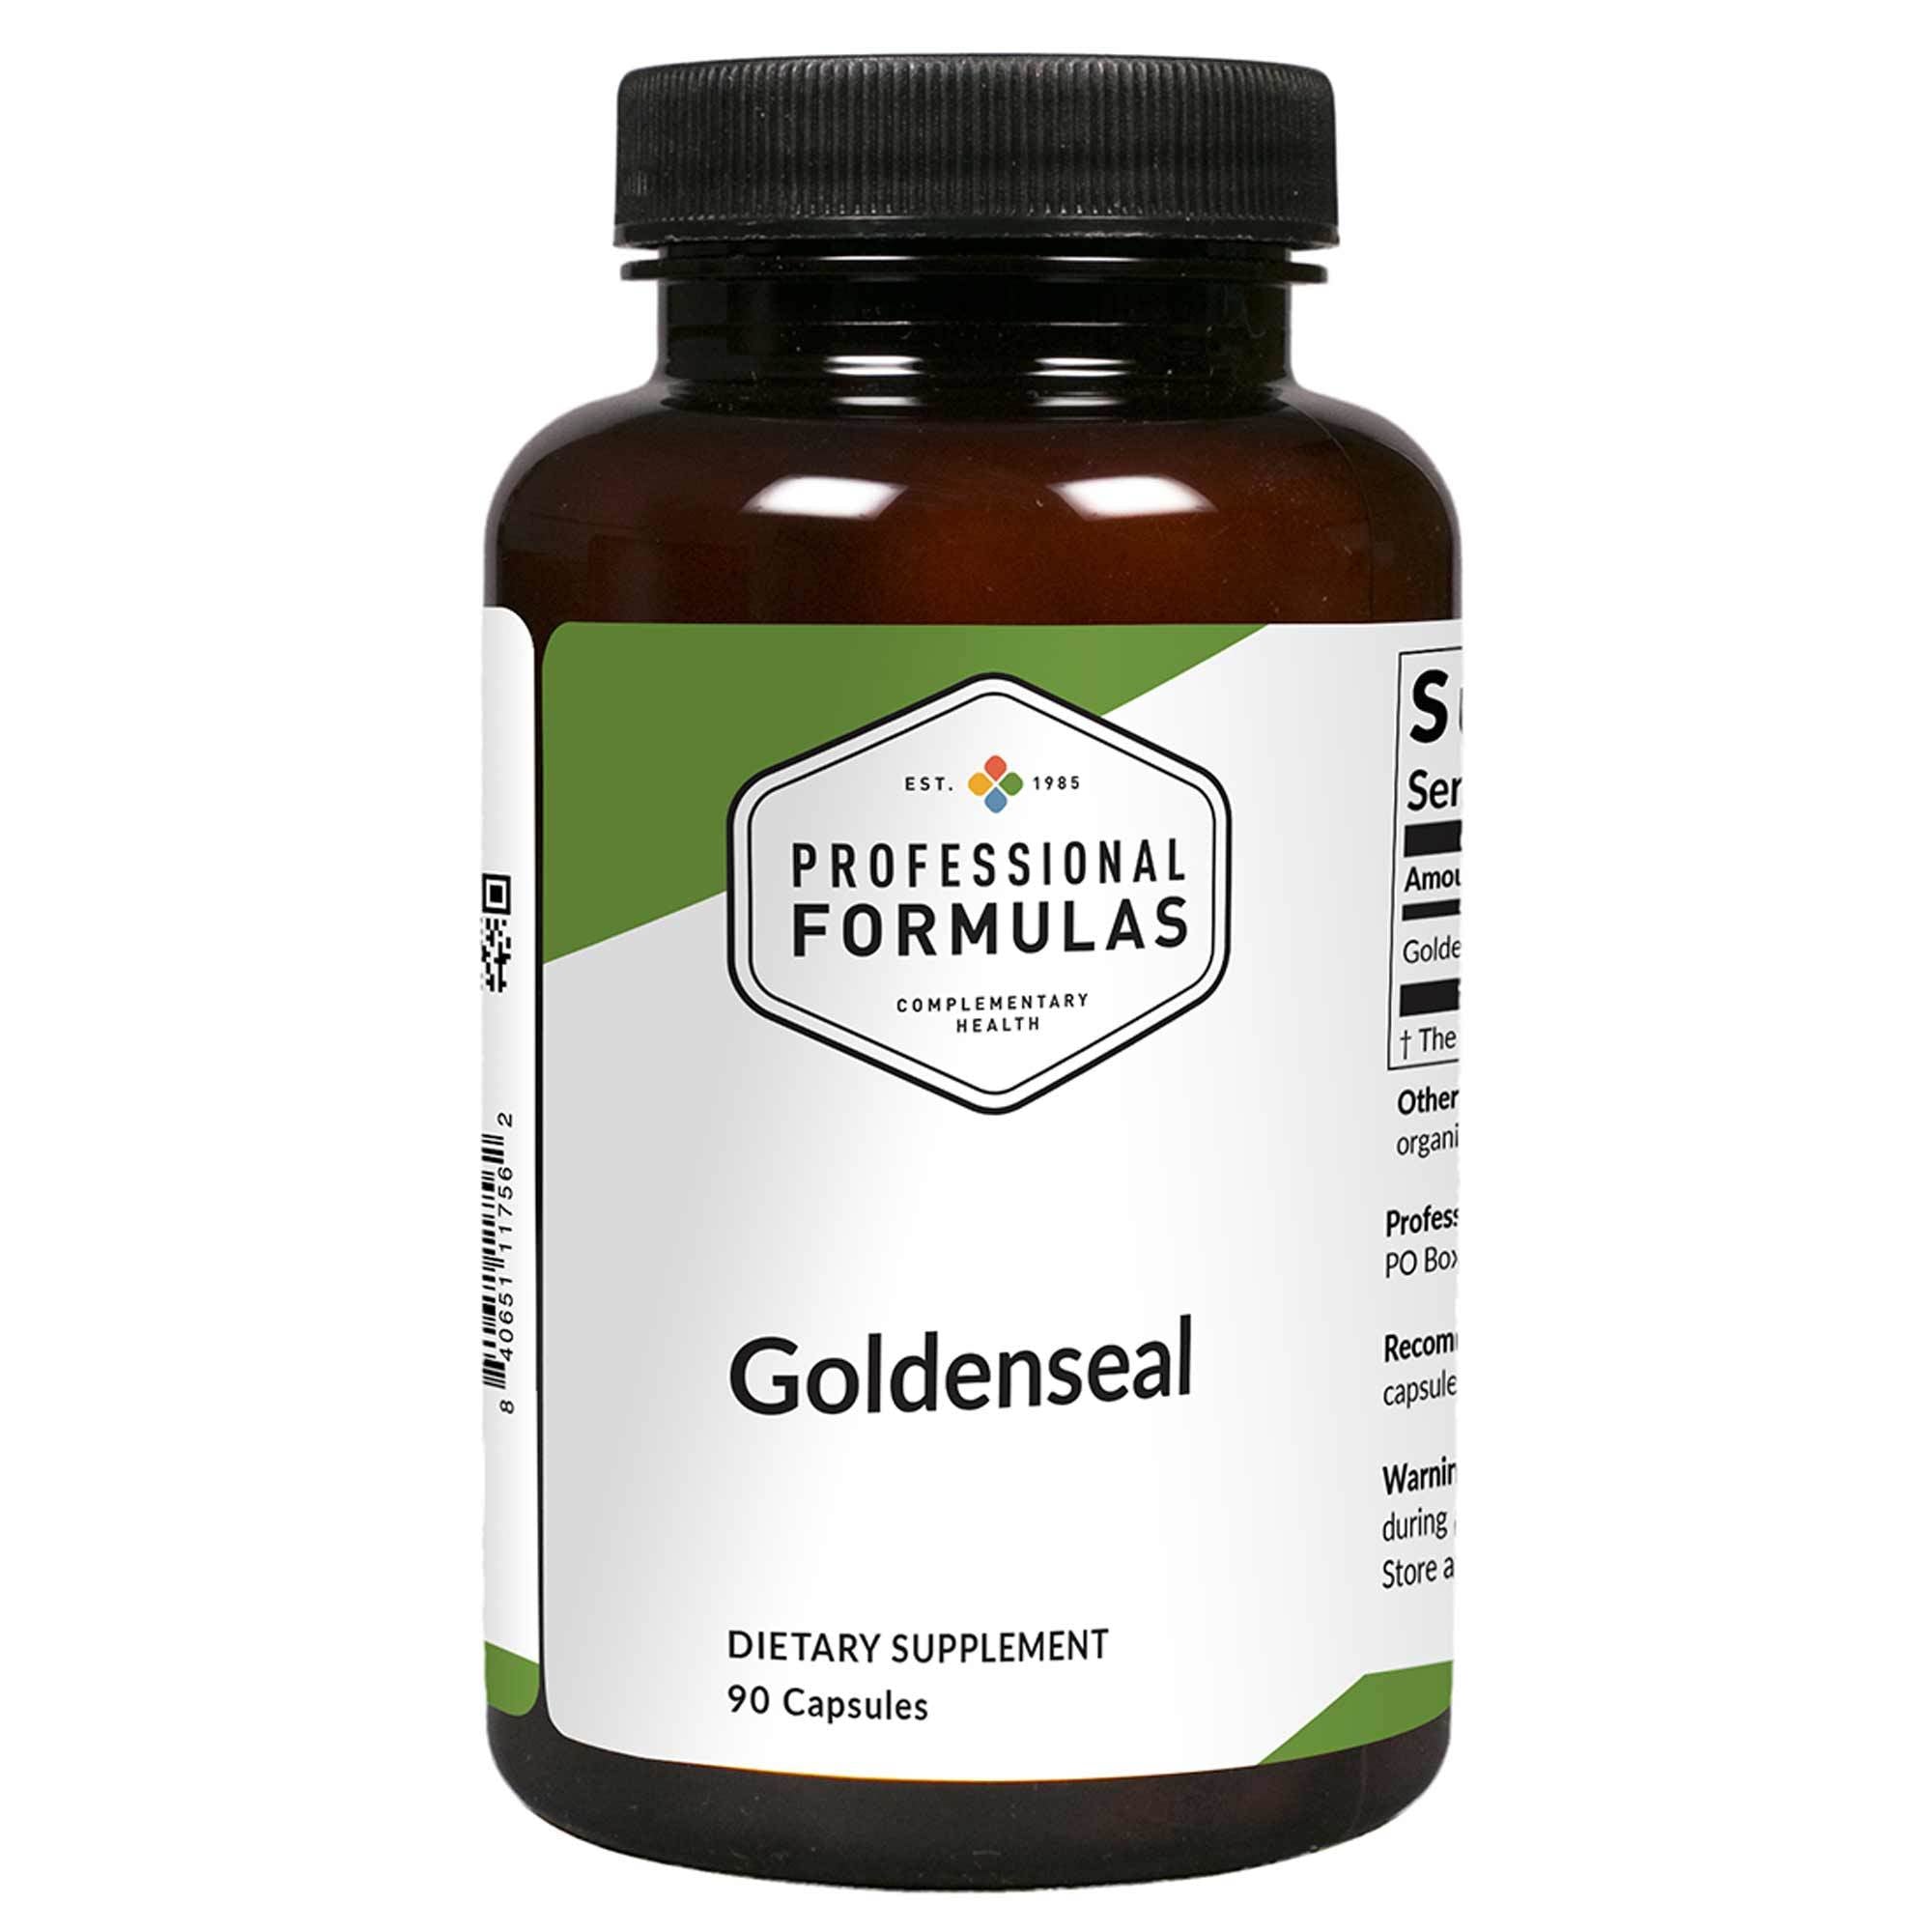 Professional Formulas - Goldenseal - 90 Capsules